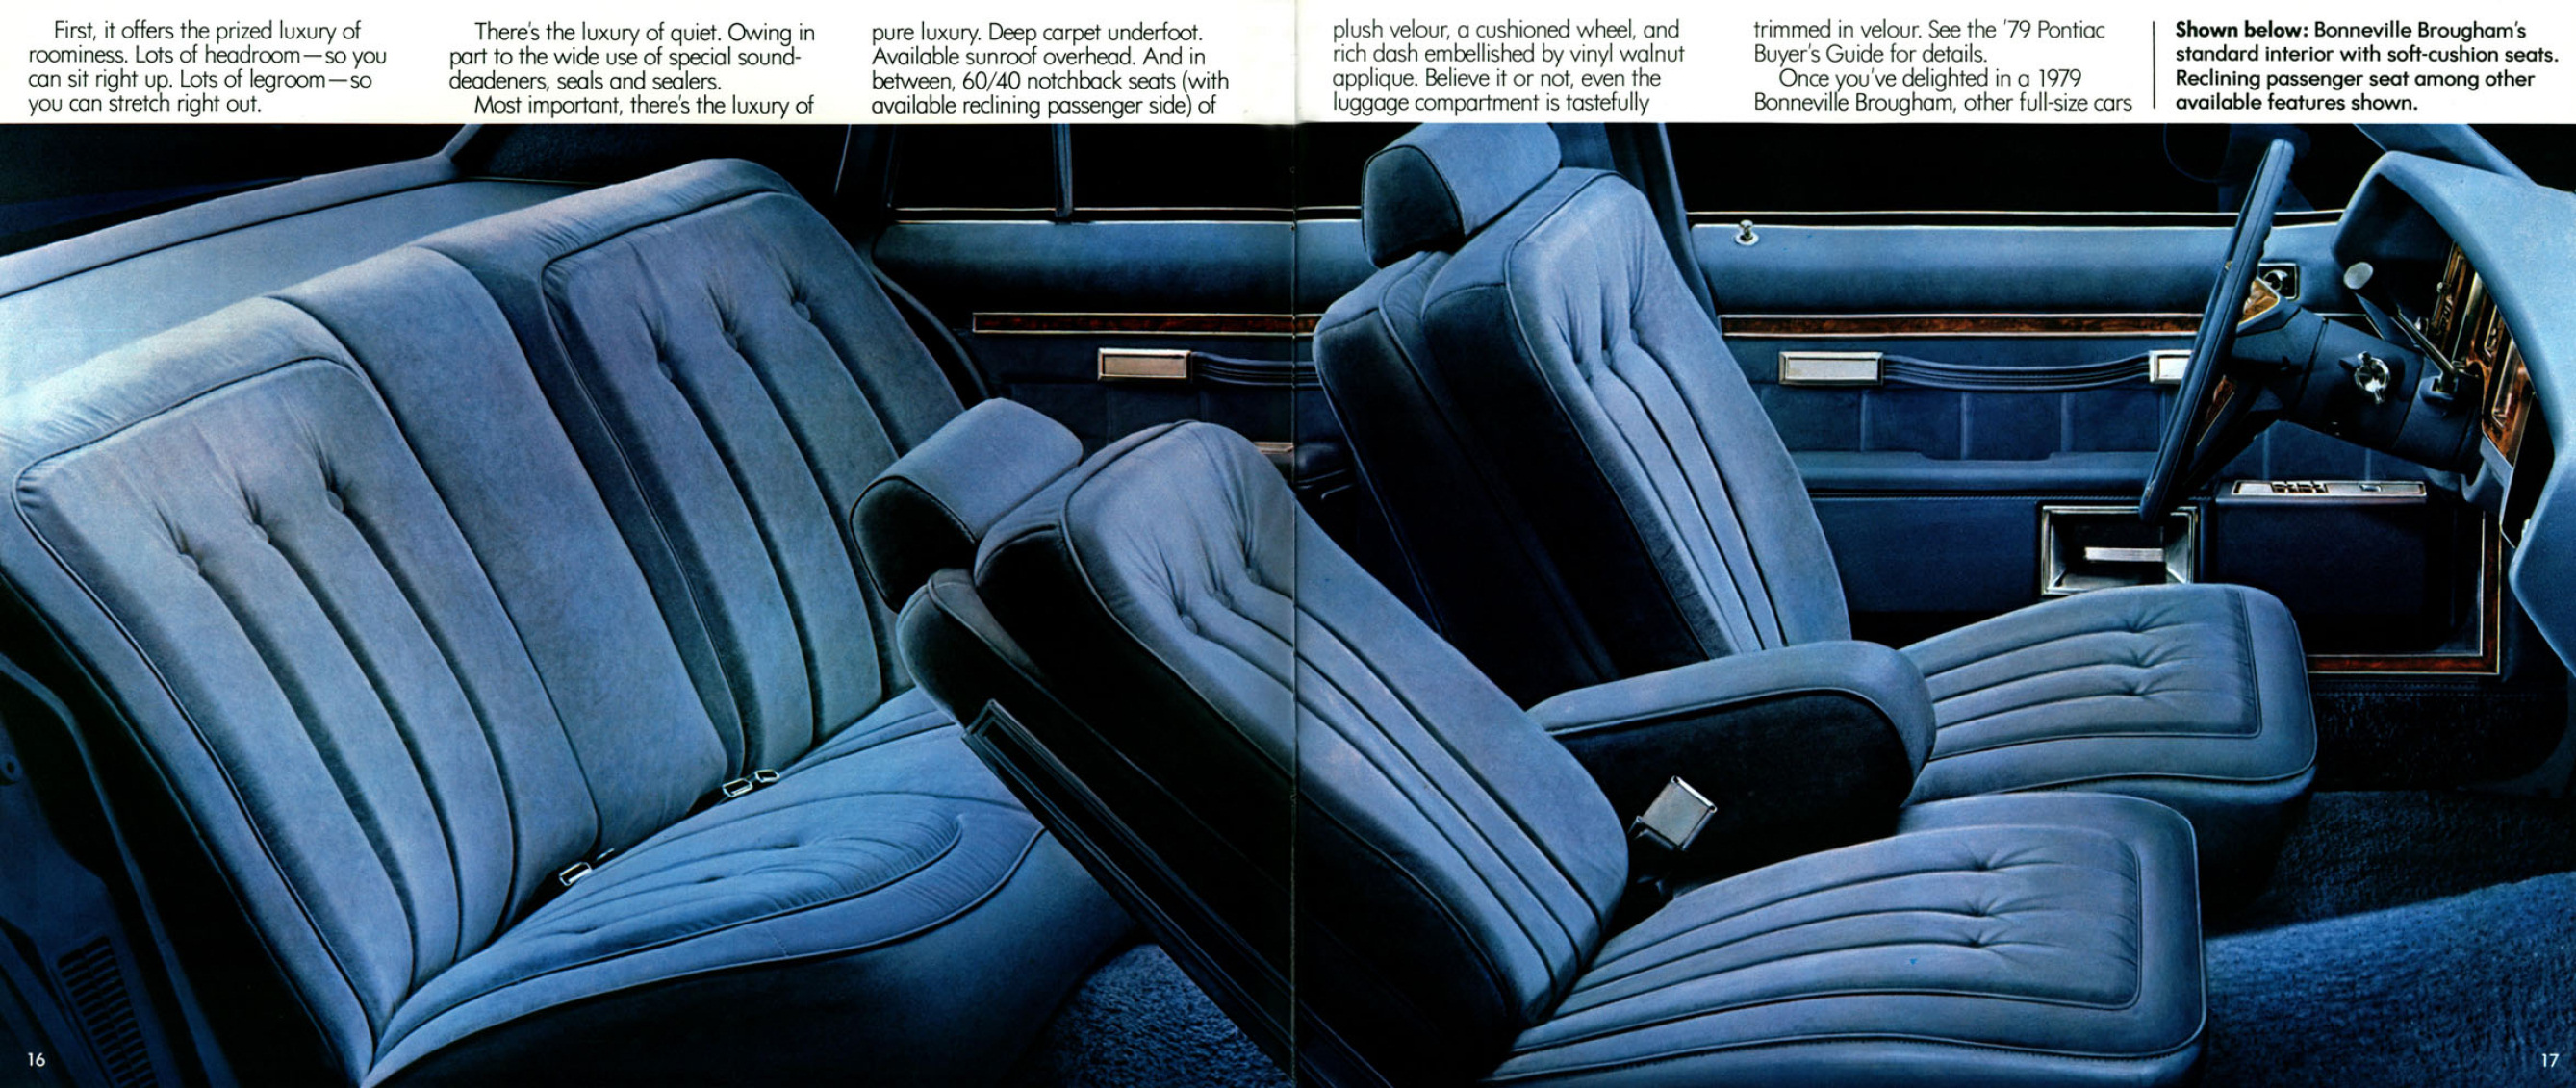 1979_Pontiac_Full_Line_Prestige-16-17